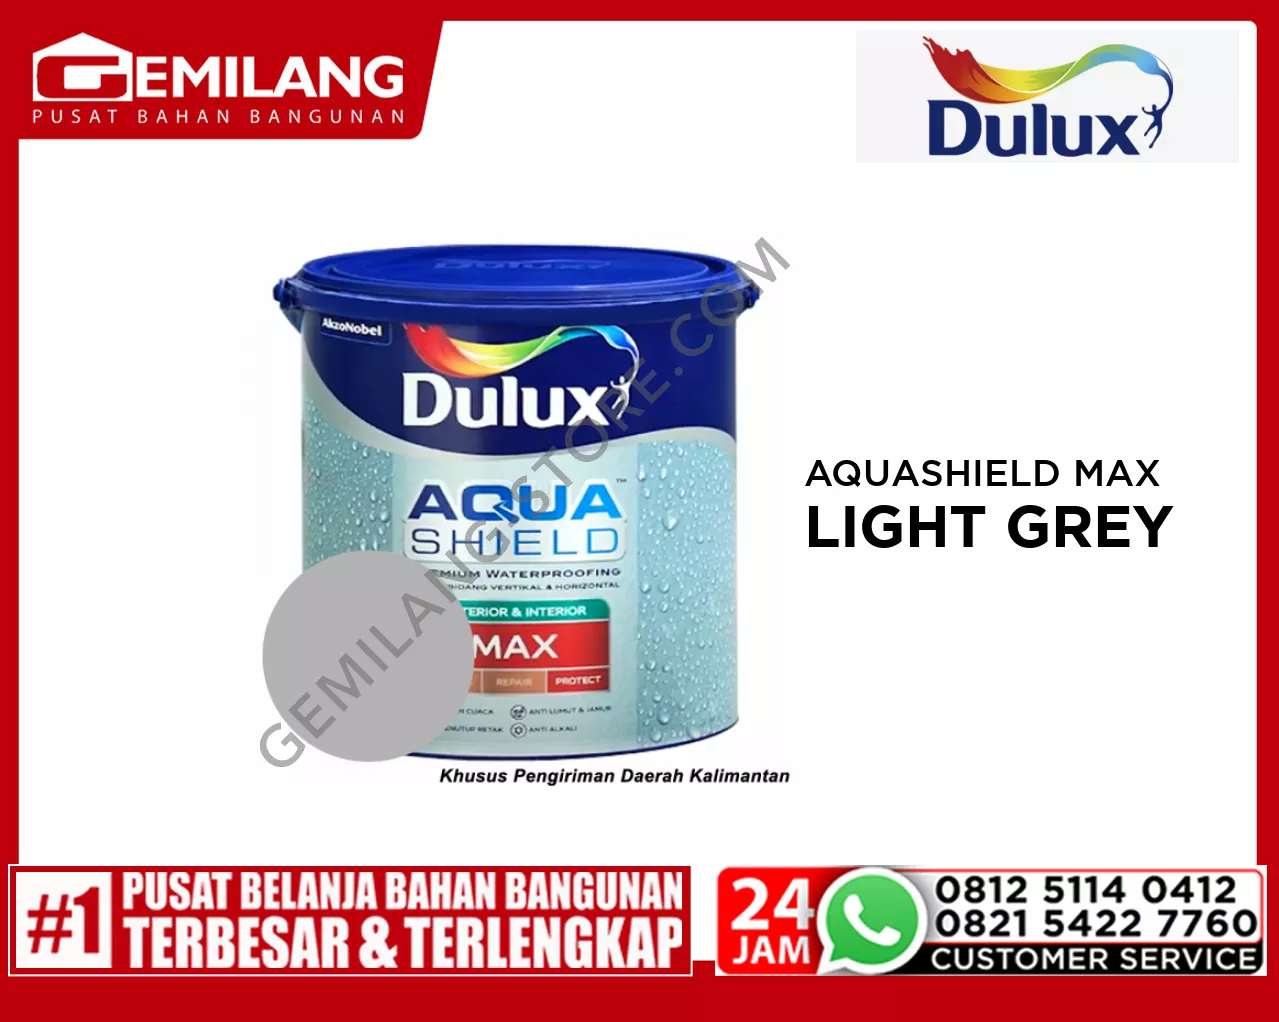 DULUX AQUASHIELD MAX LIGHT GREY 4kg